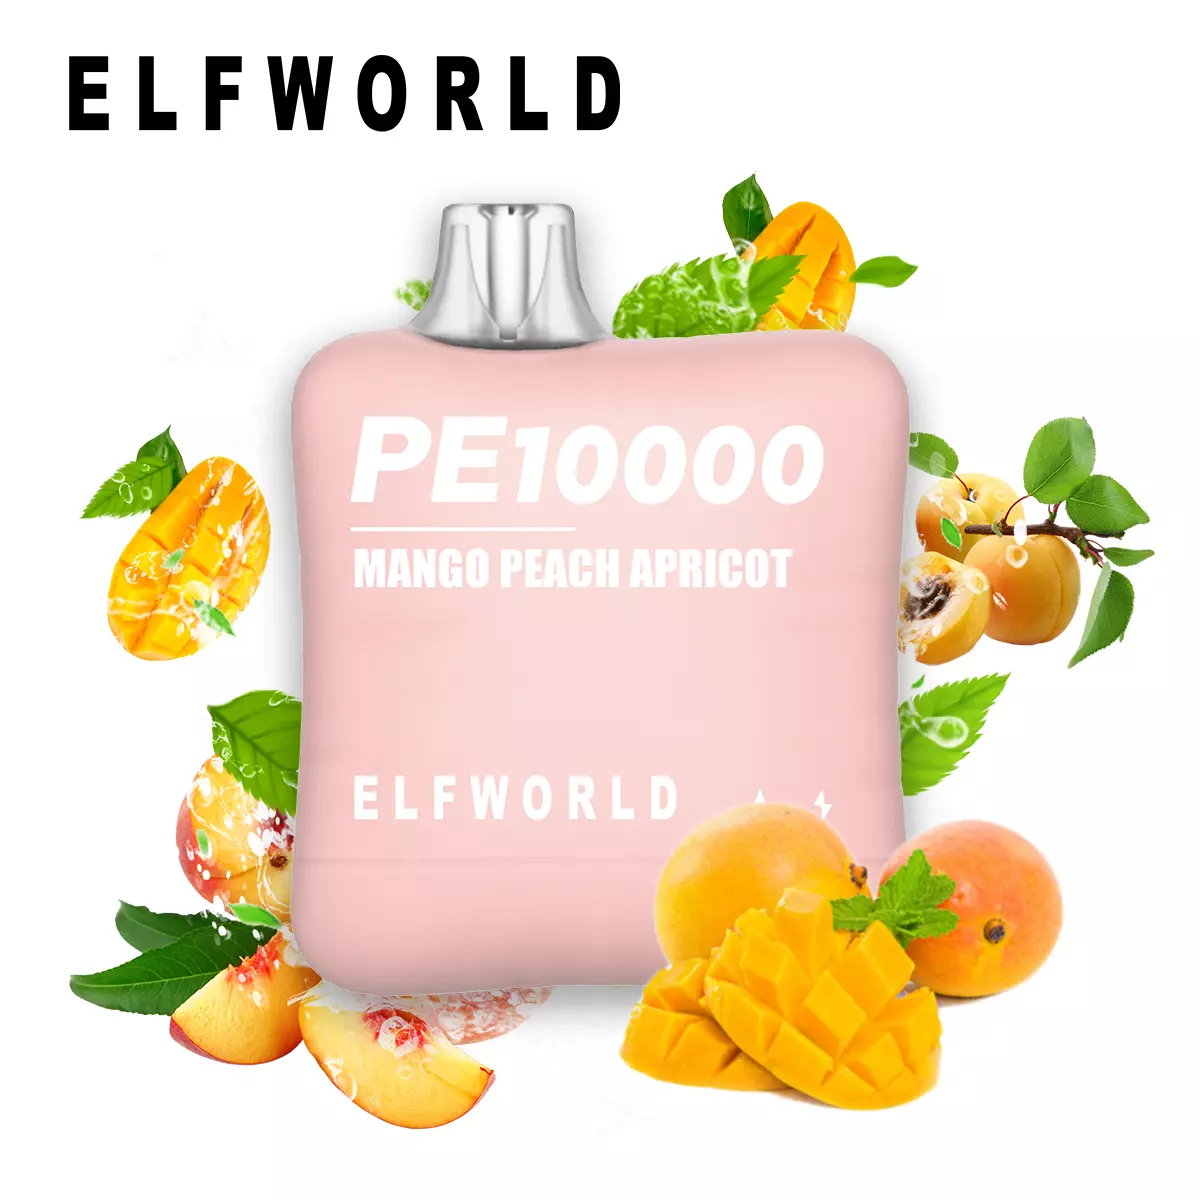 Mango Peach Apricot ELF WORLD PE 10000